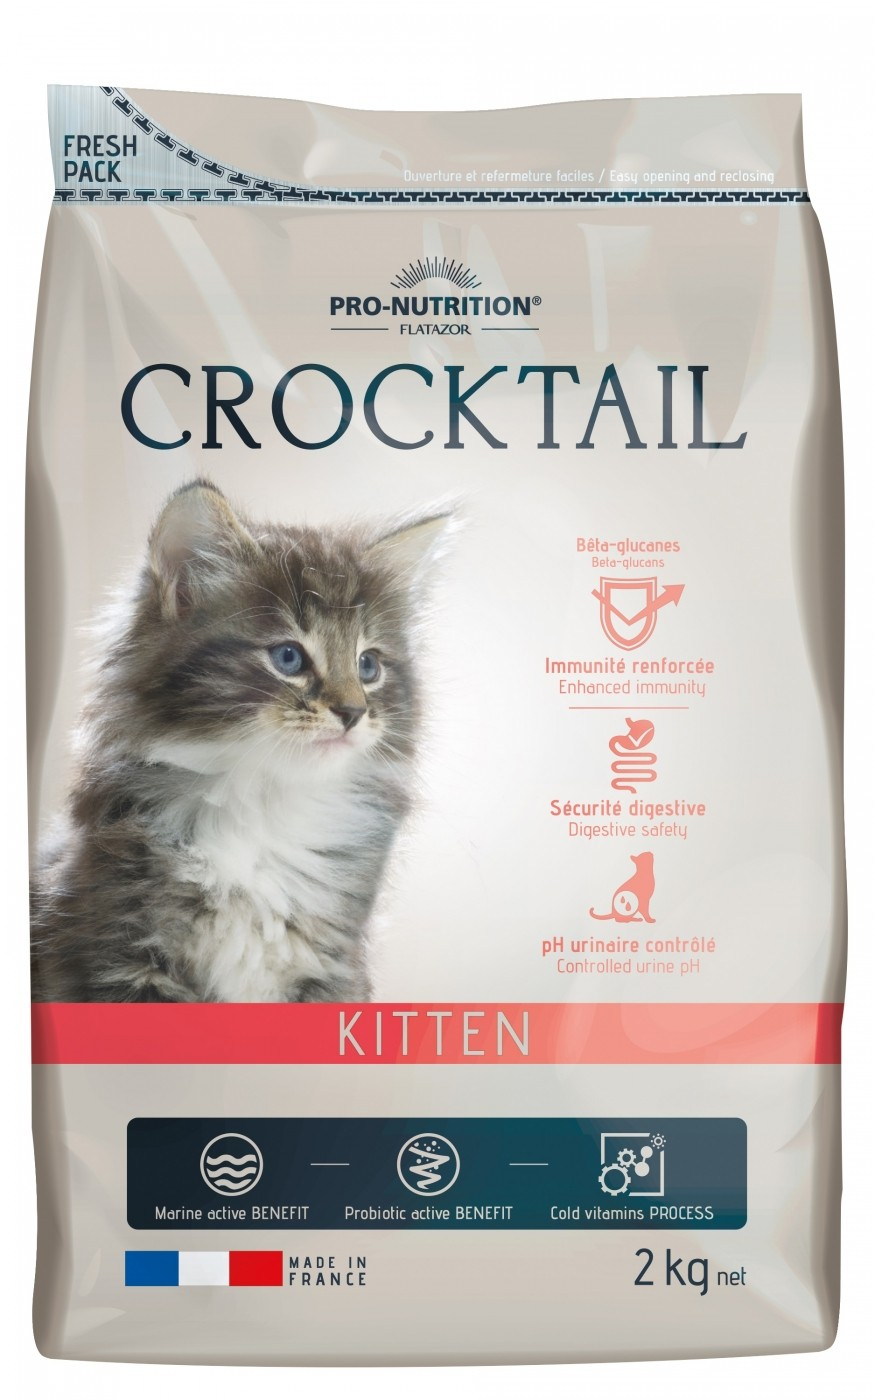 PRO-NUTRITION Flatazor CROCKTAIL Kitten für Kätzchen